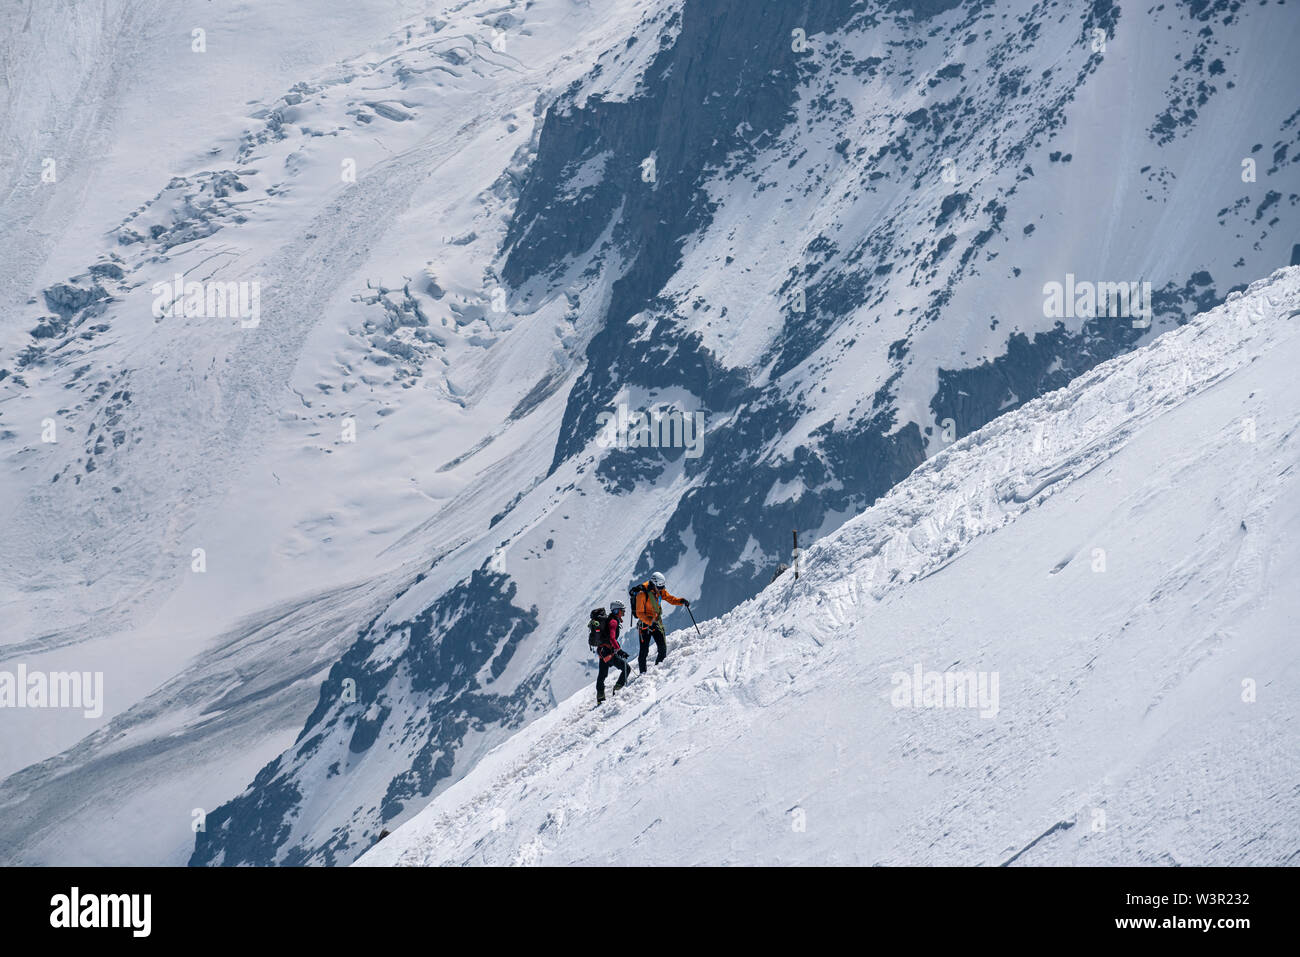 Chamonix, France - 18/06/2019: Mountaineers ascending towards Aiguille du Midi on a snowy ridge. Stock Photo